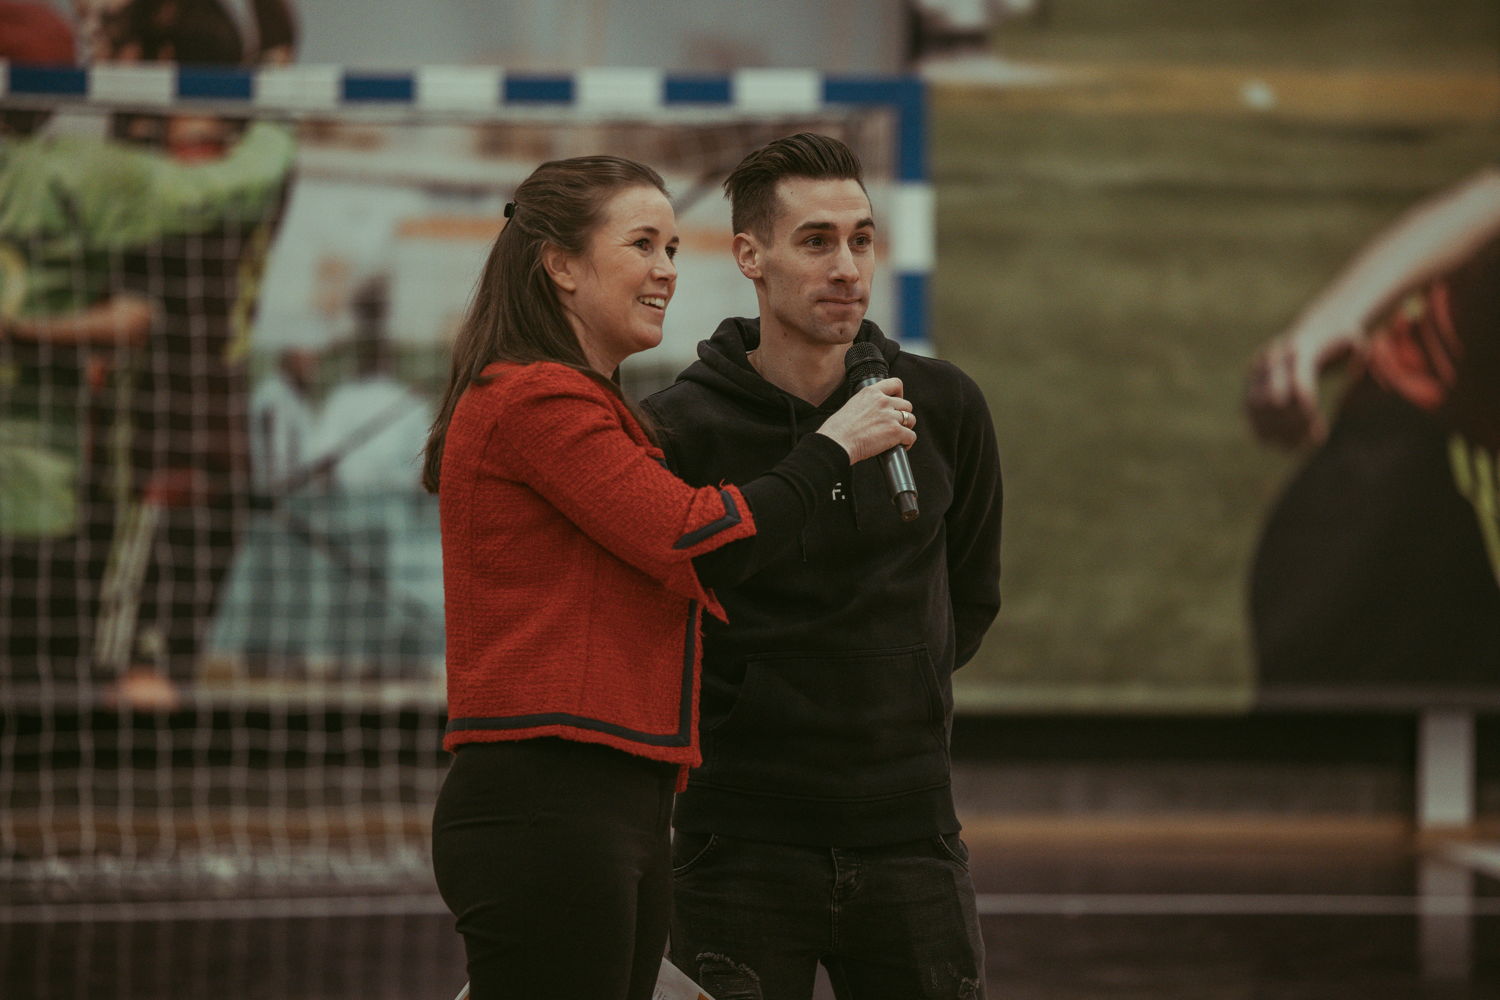 An Caers (CEO Special Olympics Belgium) en Steven Dillien (speler van RSCA Futsal)